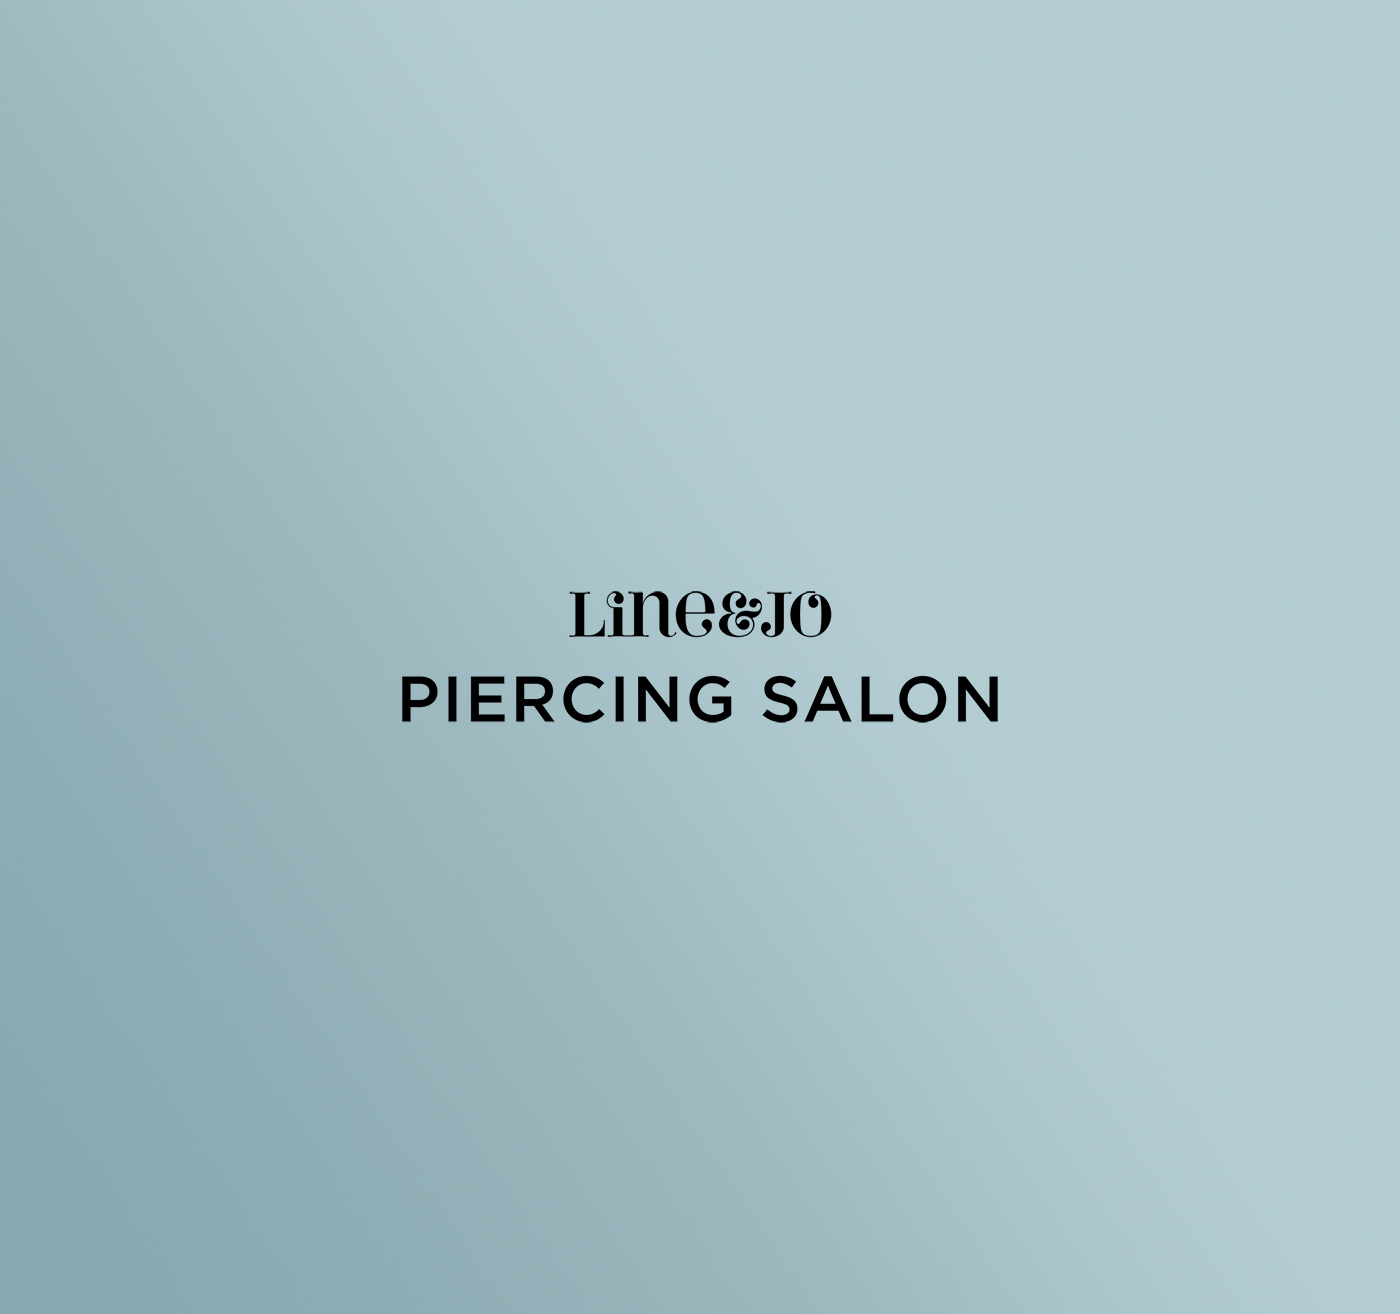 LJ Piercing Salon